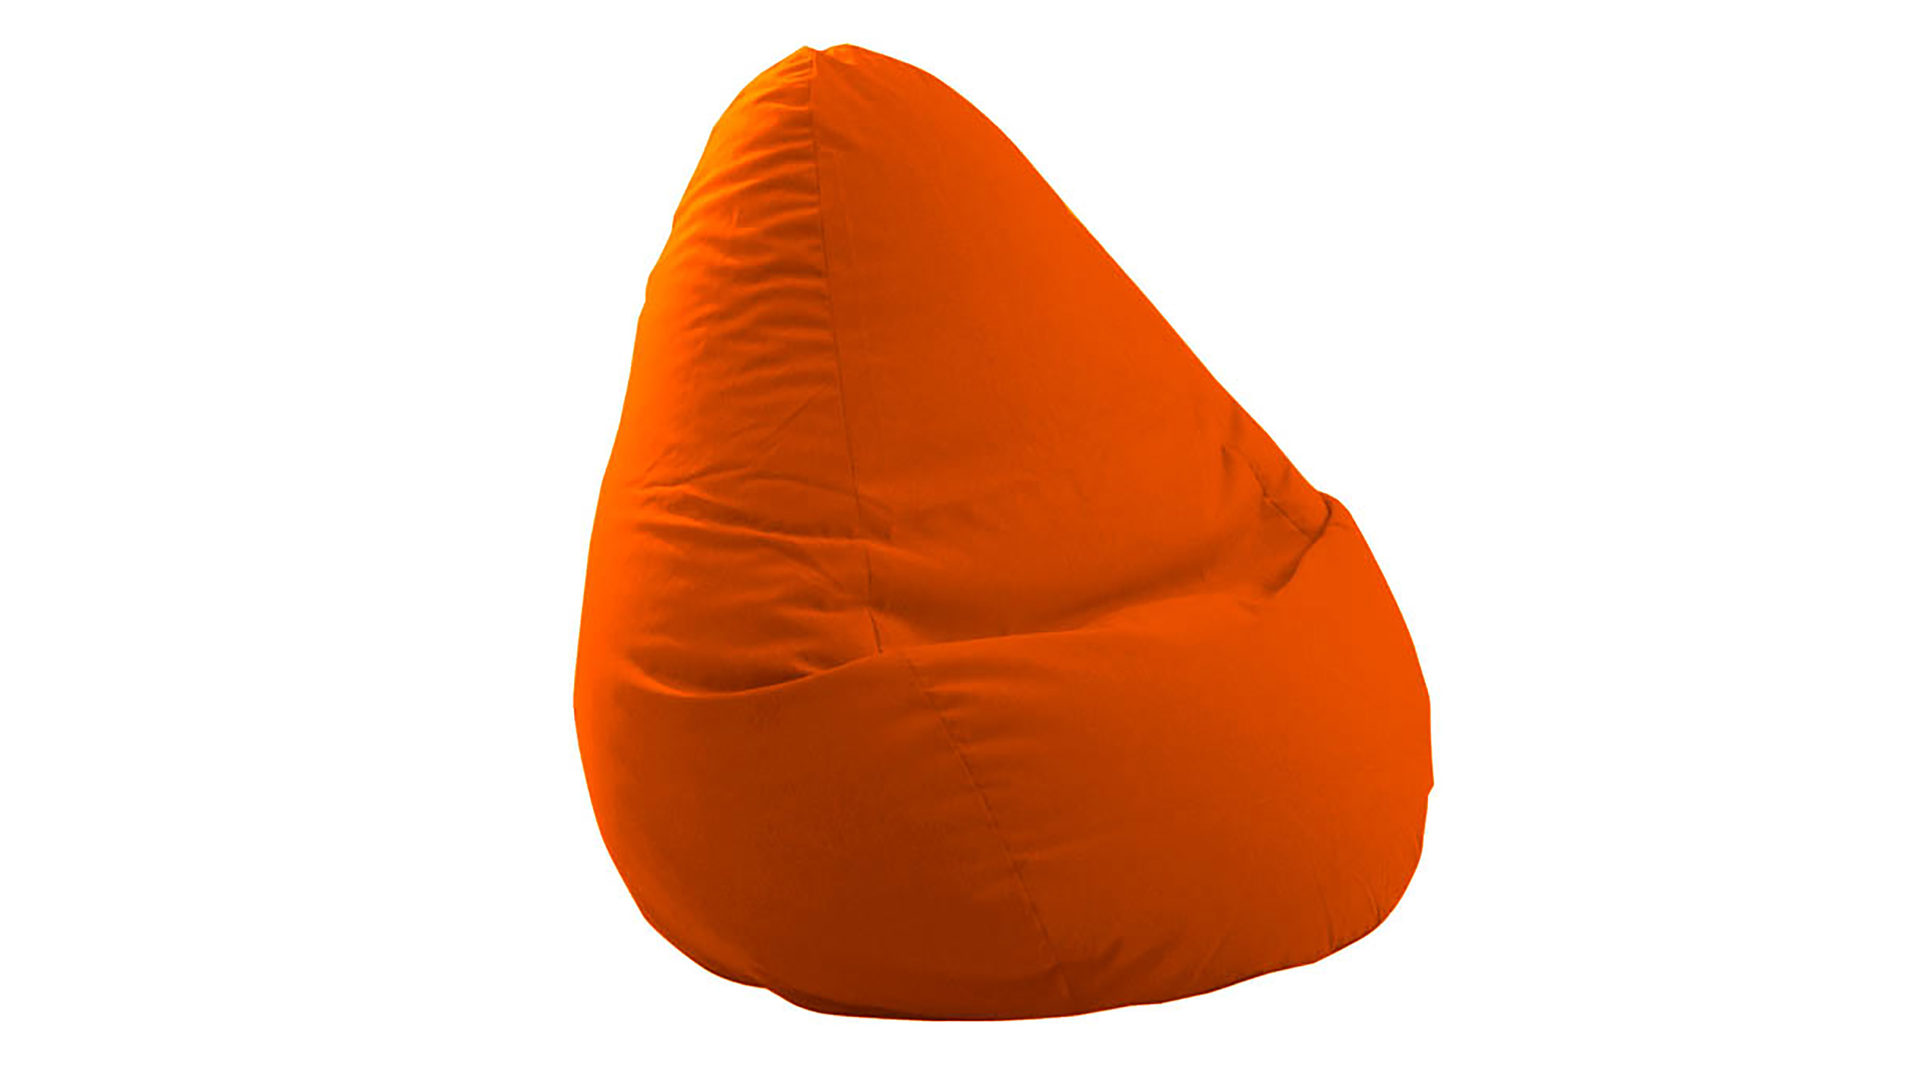 Standard-Sitzsack Magma sitting point aus Stoff in Orange SITTING POINT Sitzsack Easy XL als Sitzmöbel oranger Mikrofaserbezug - ca. 220 Liter